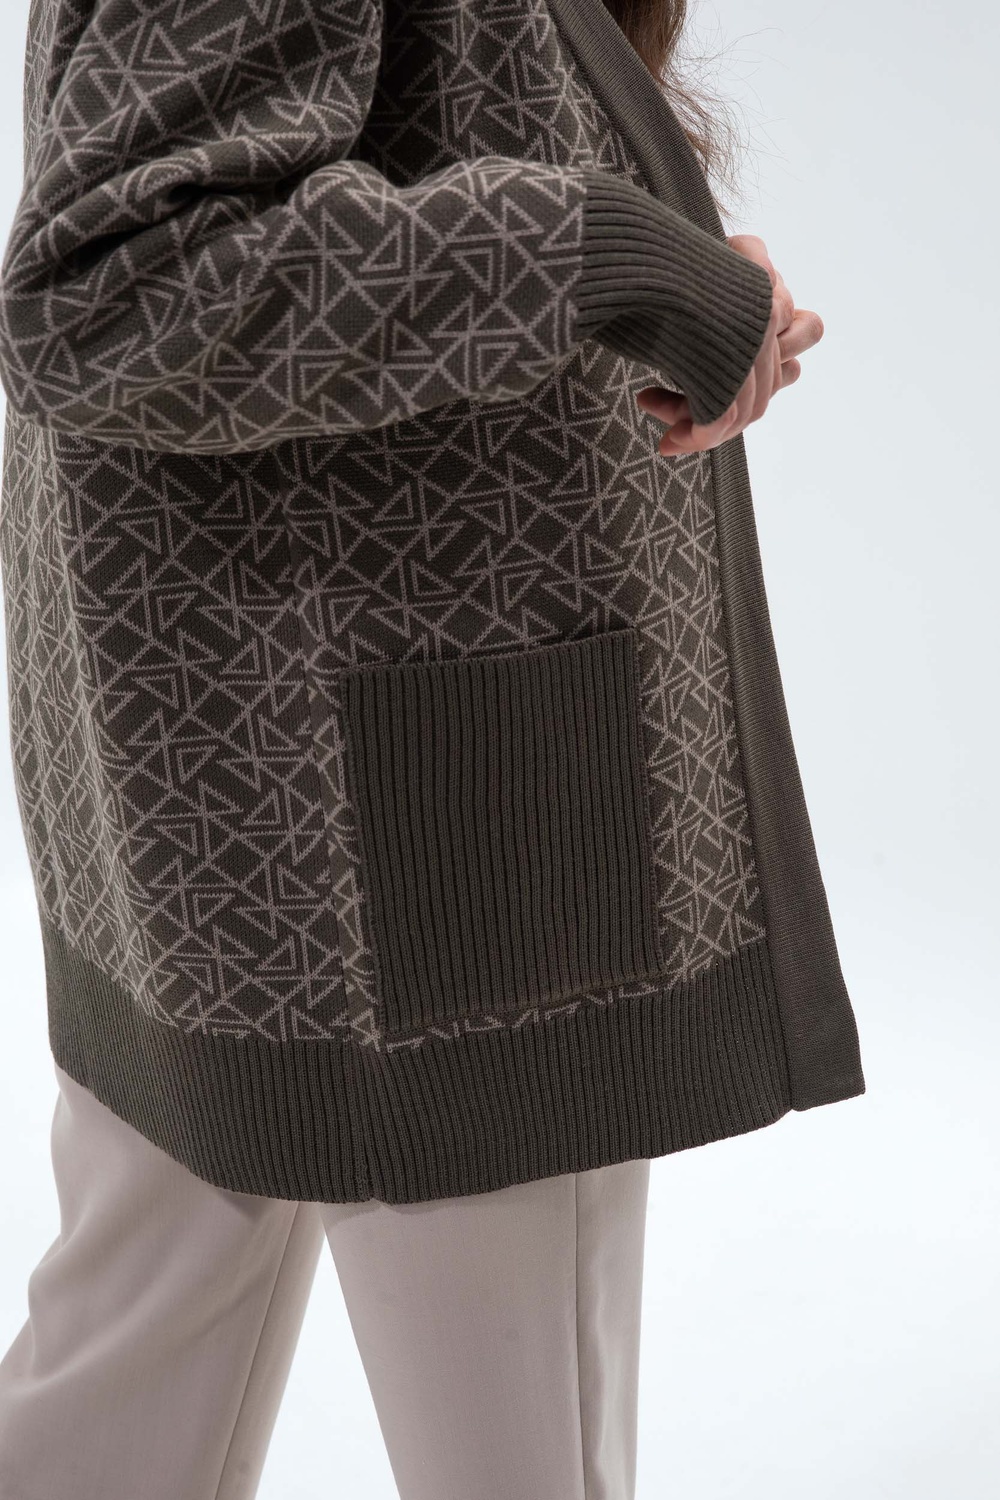 MEDIUM cardigan knitted from merino wool taupe logo